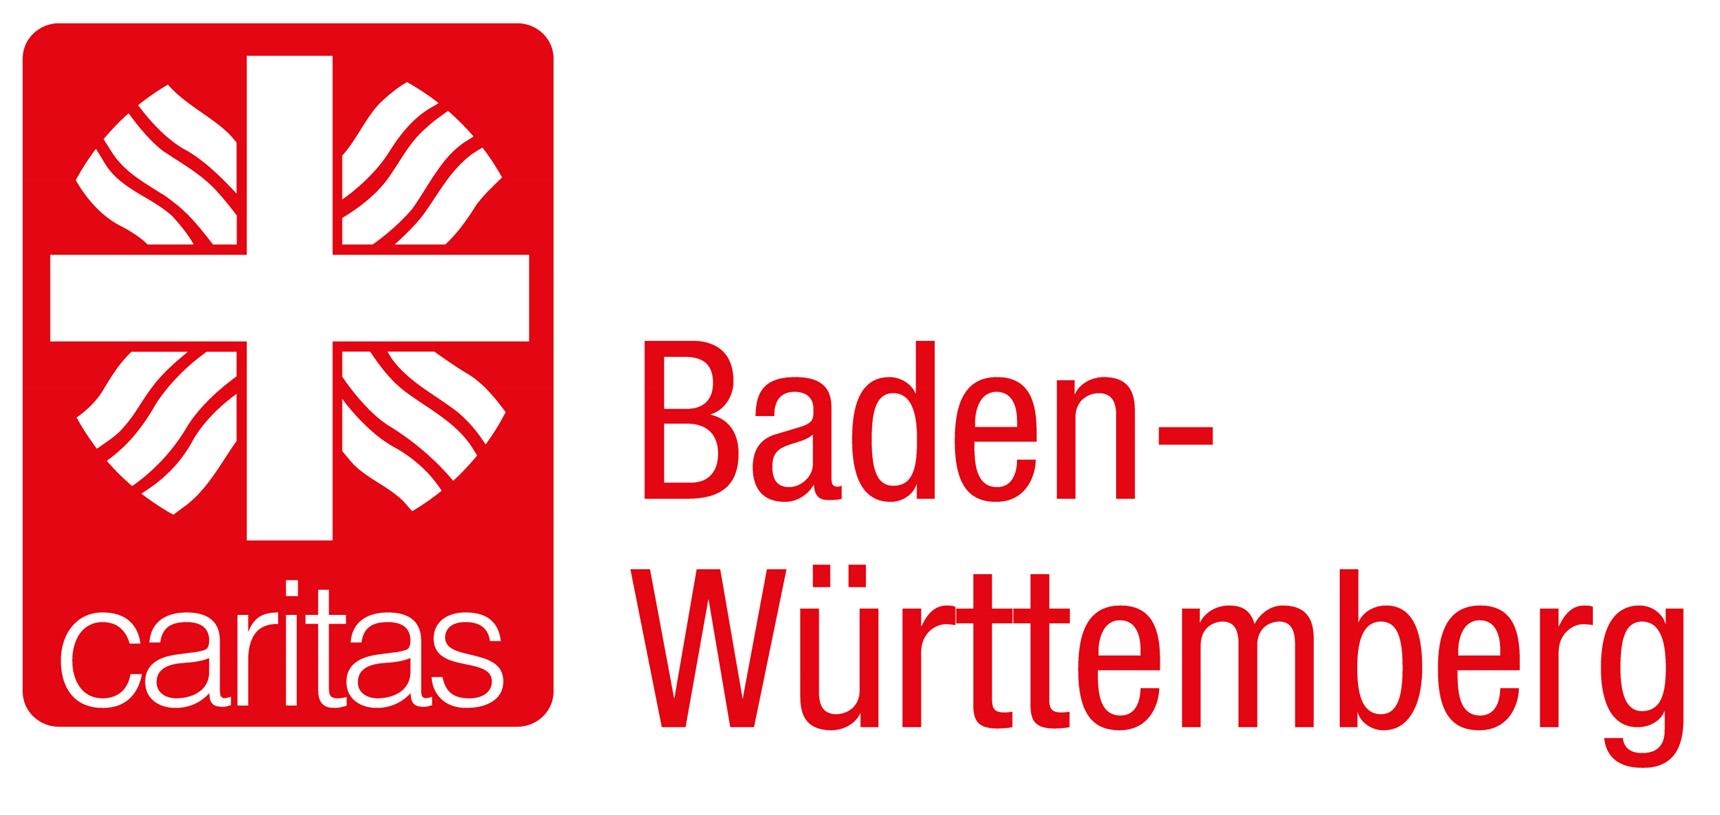 Caritas Baden-Württemberg